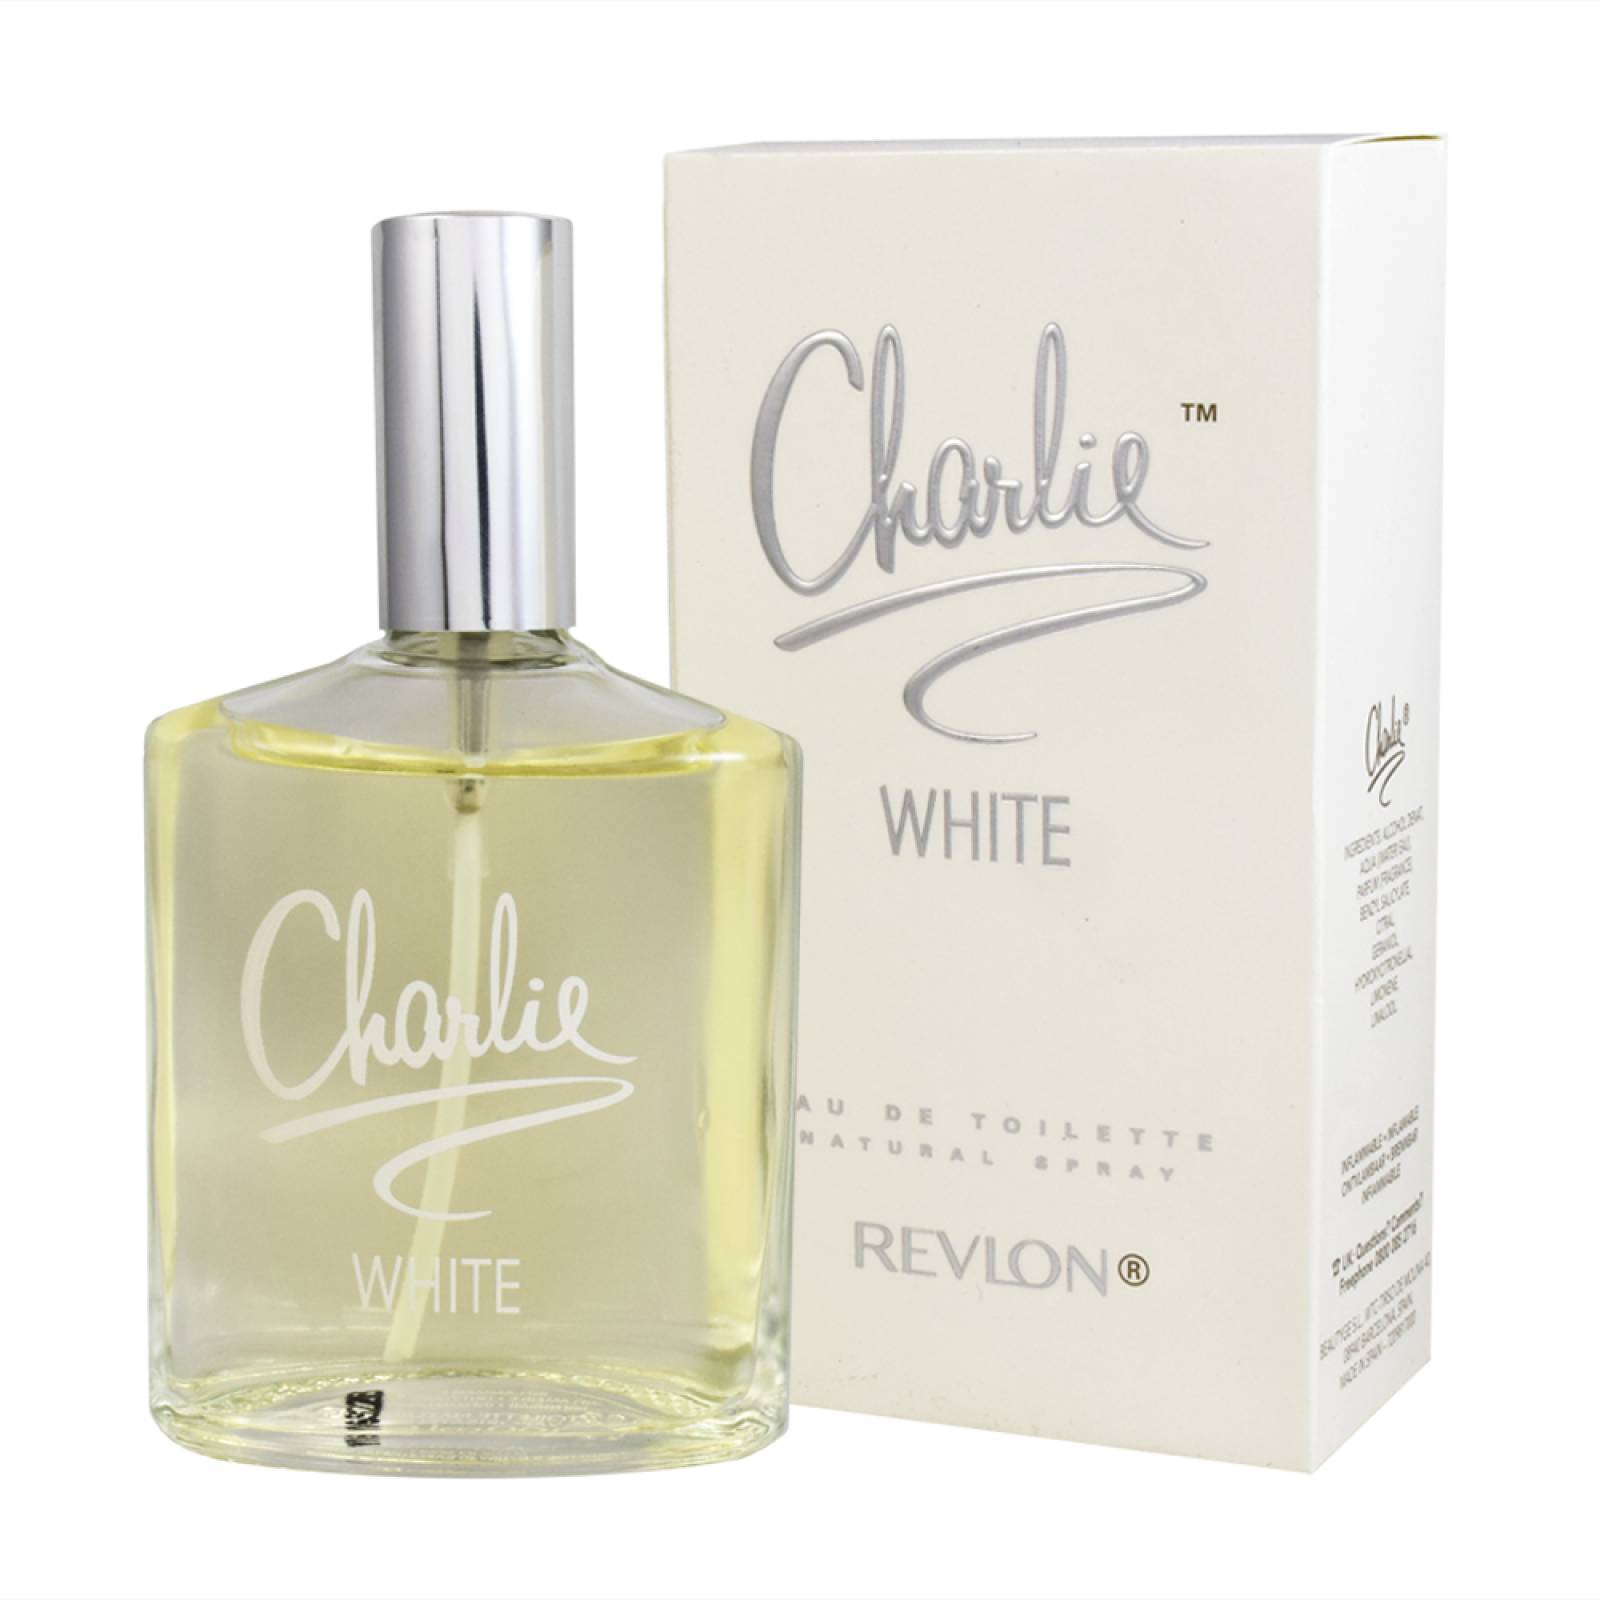 Charlie White 100 ml Eau de Toilette Spray de Revlon Fragancia para Dama